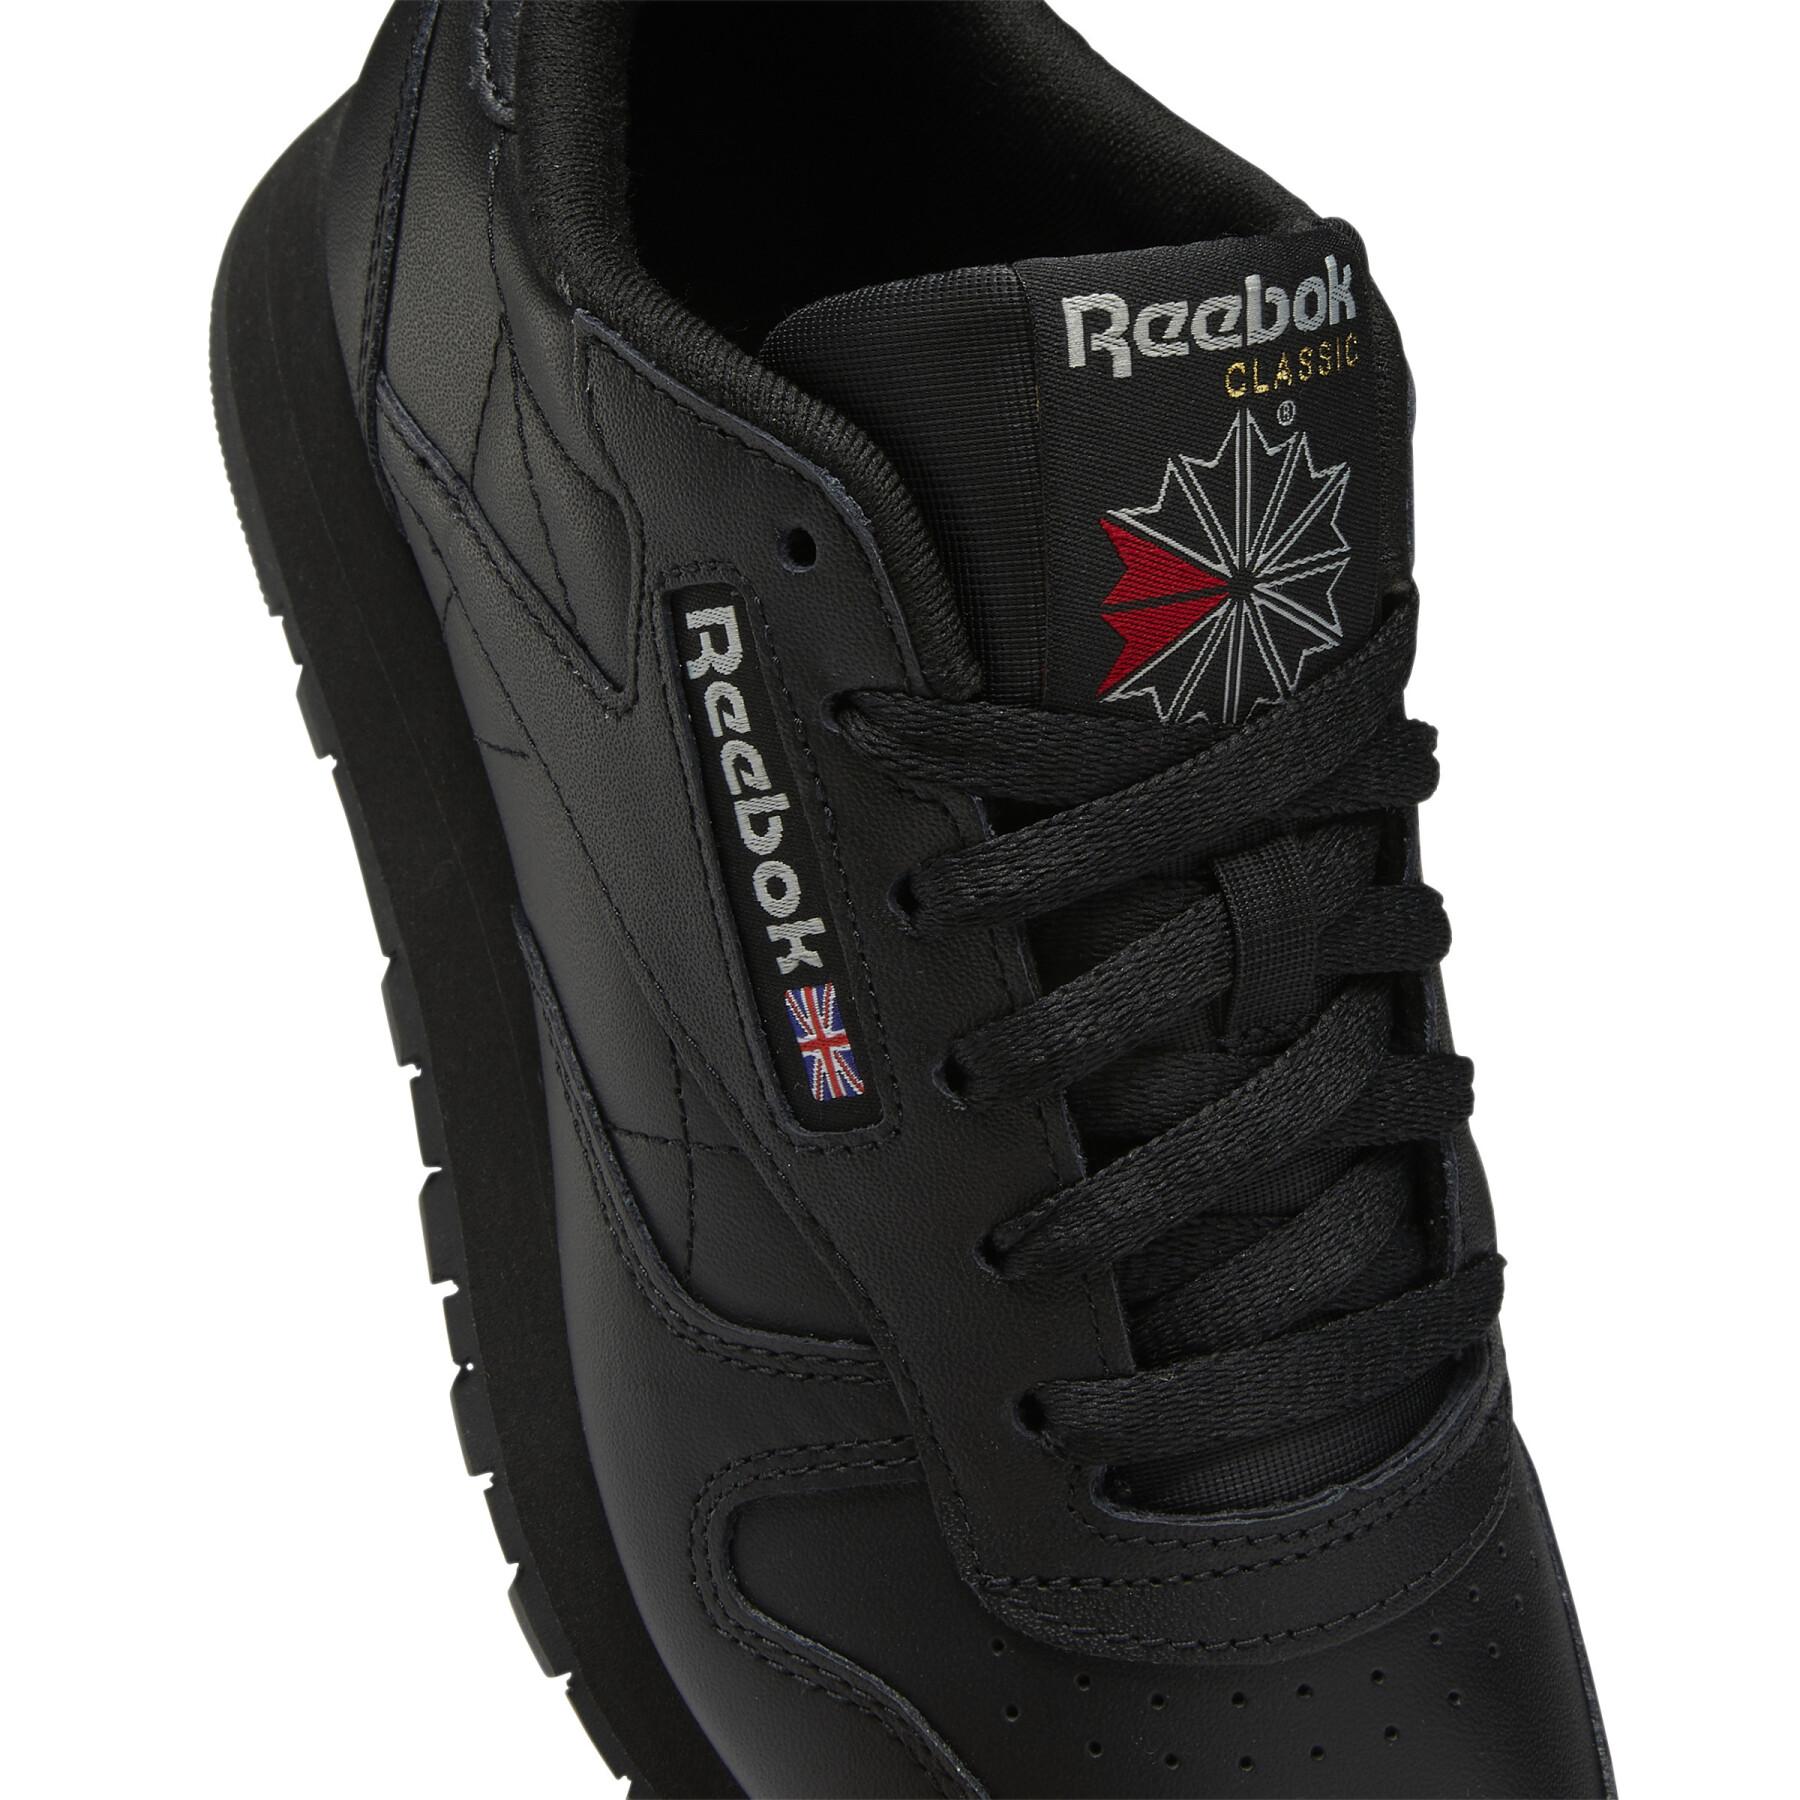 Sapatos de Mulher Reebok Classic Leather